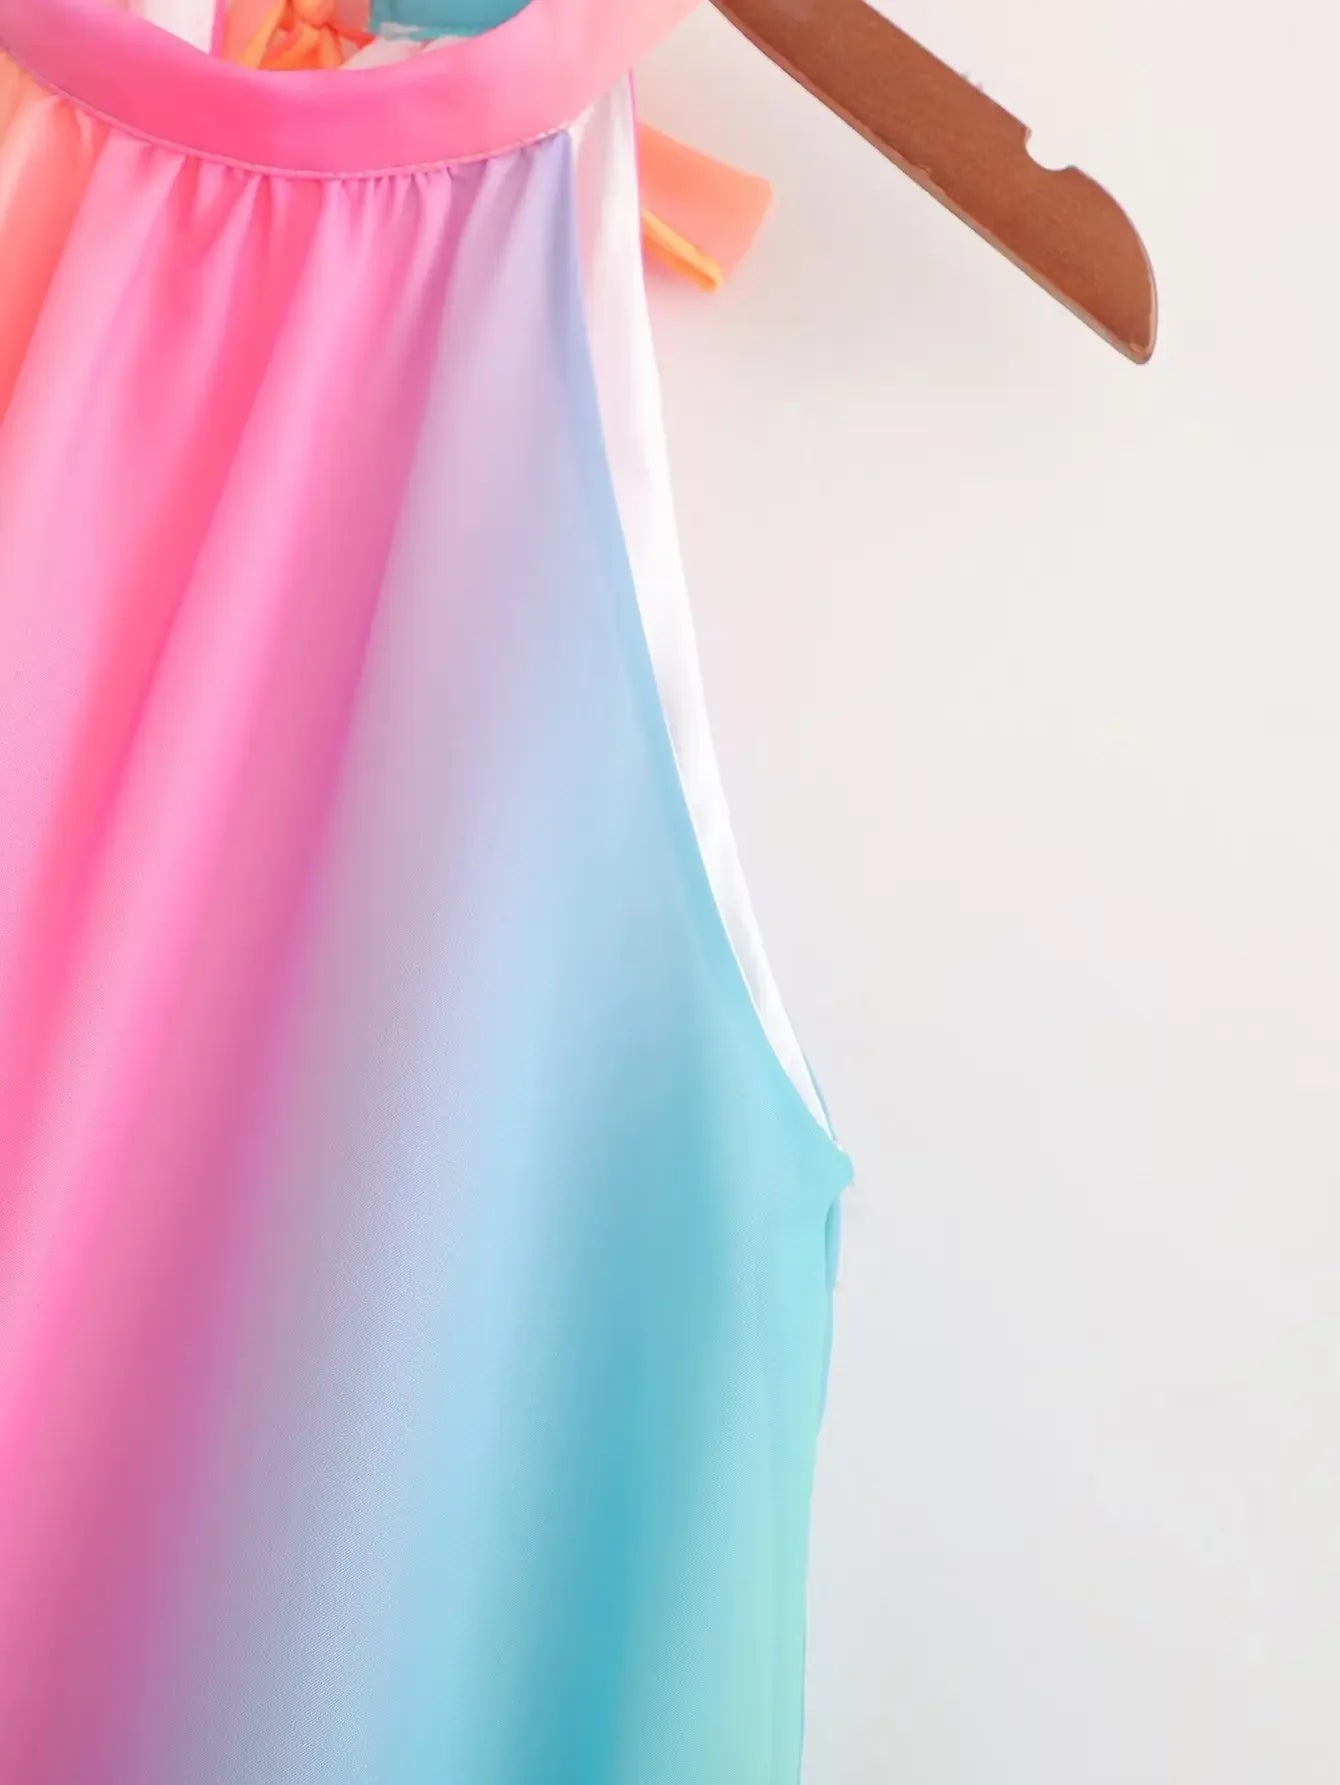 SLTNX TRAF Rainbow Mini Dresse for Women Fashion Chiffon Sleeveless Dresses Ladies Chic Lace-up A-Line Casual Loose Dress New In - TaMNz